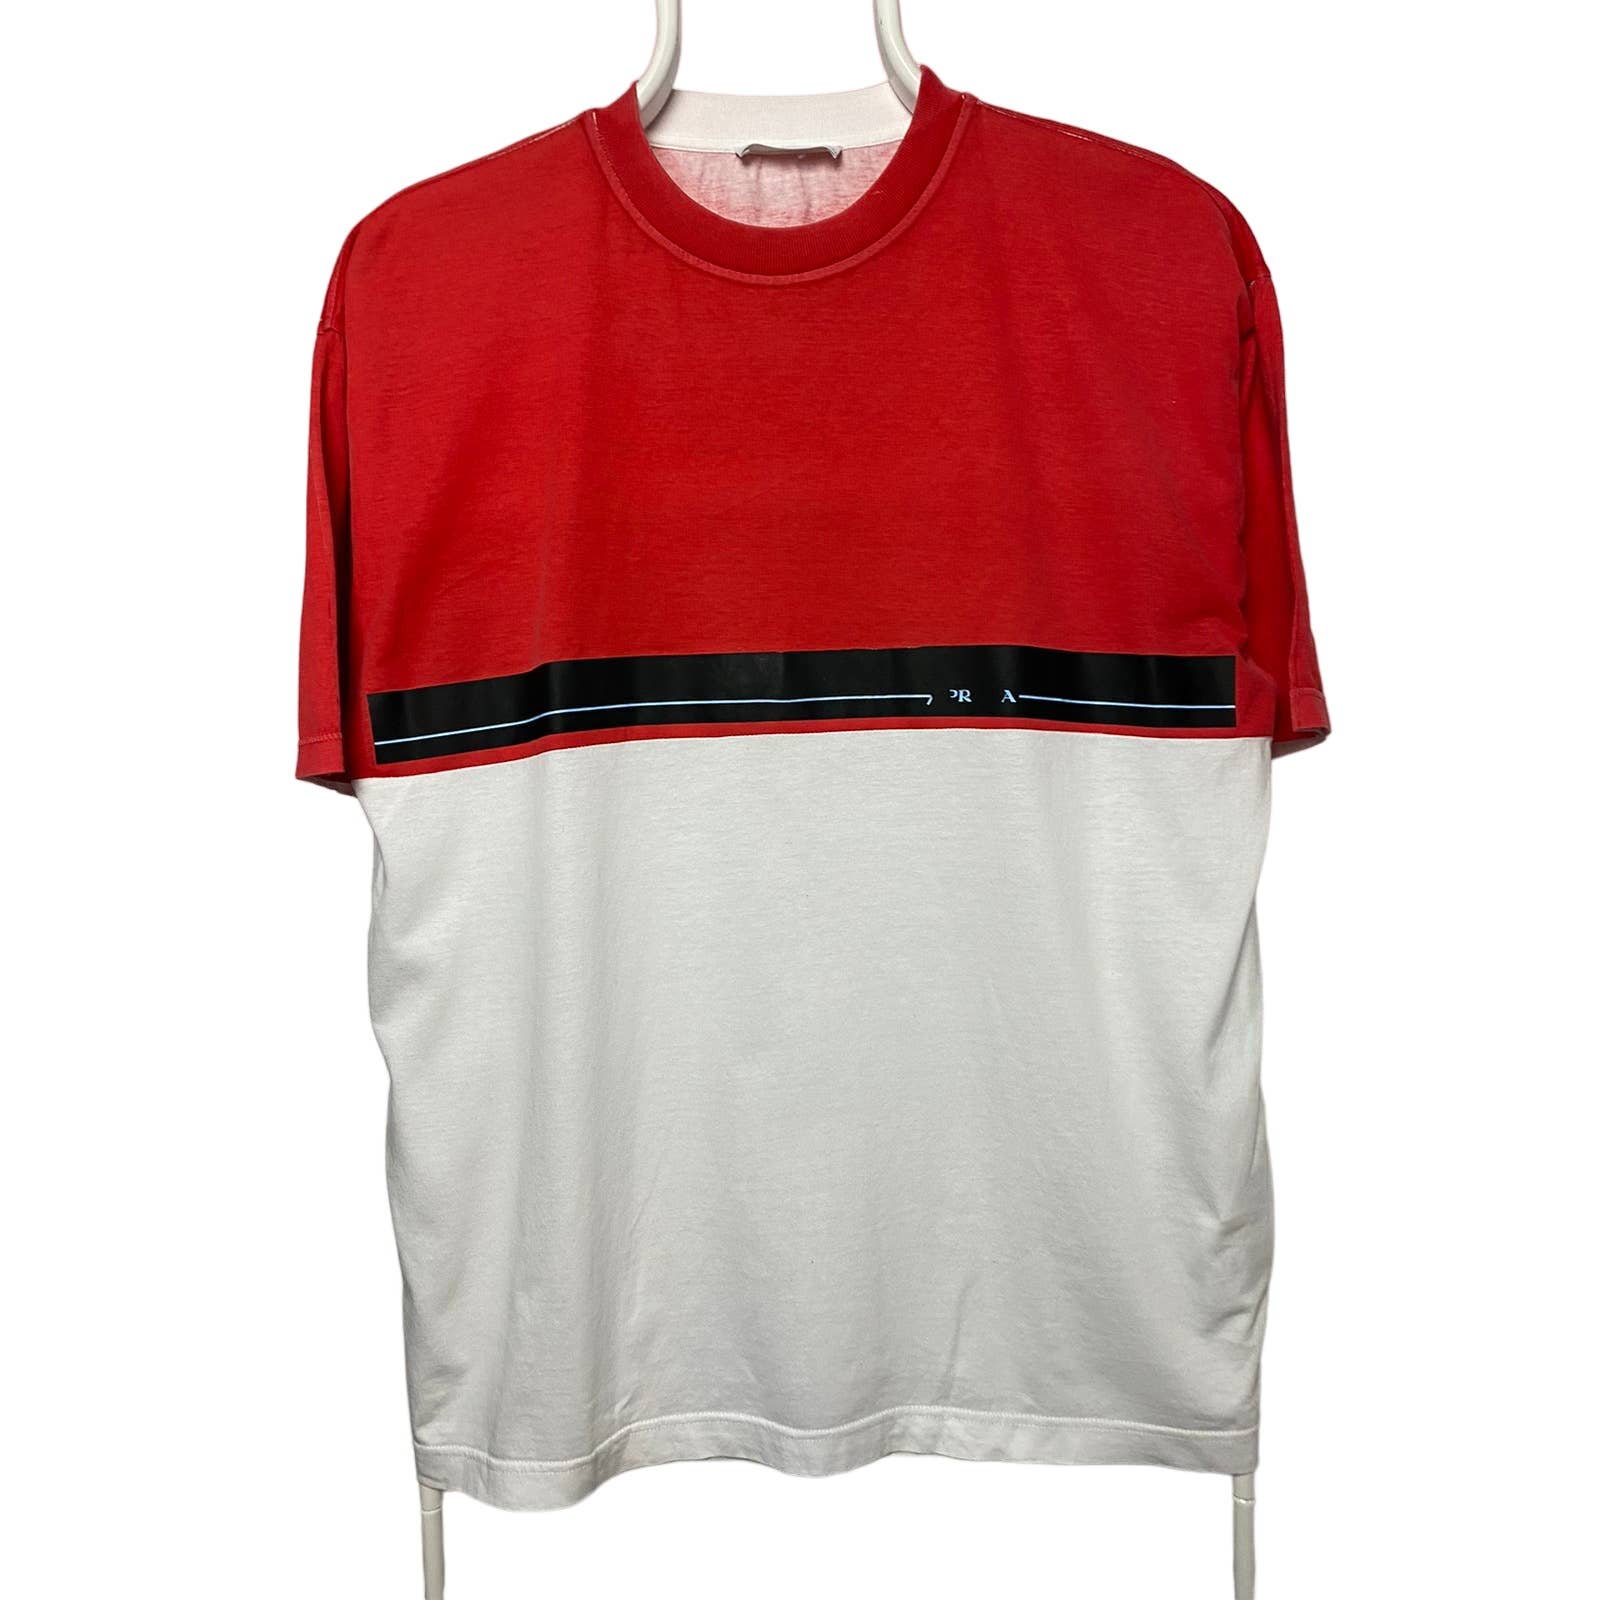 Prada t-shirt small logo red white